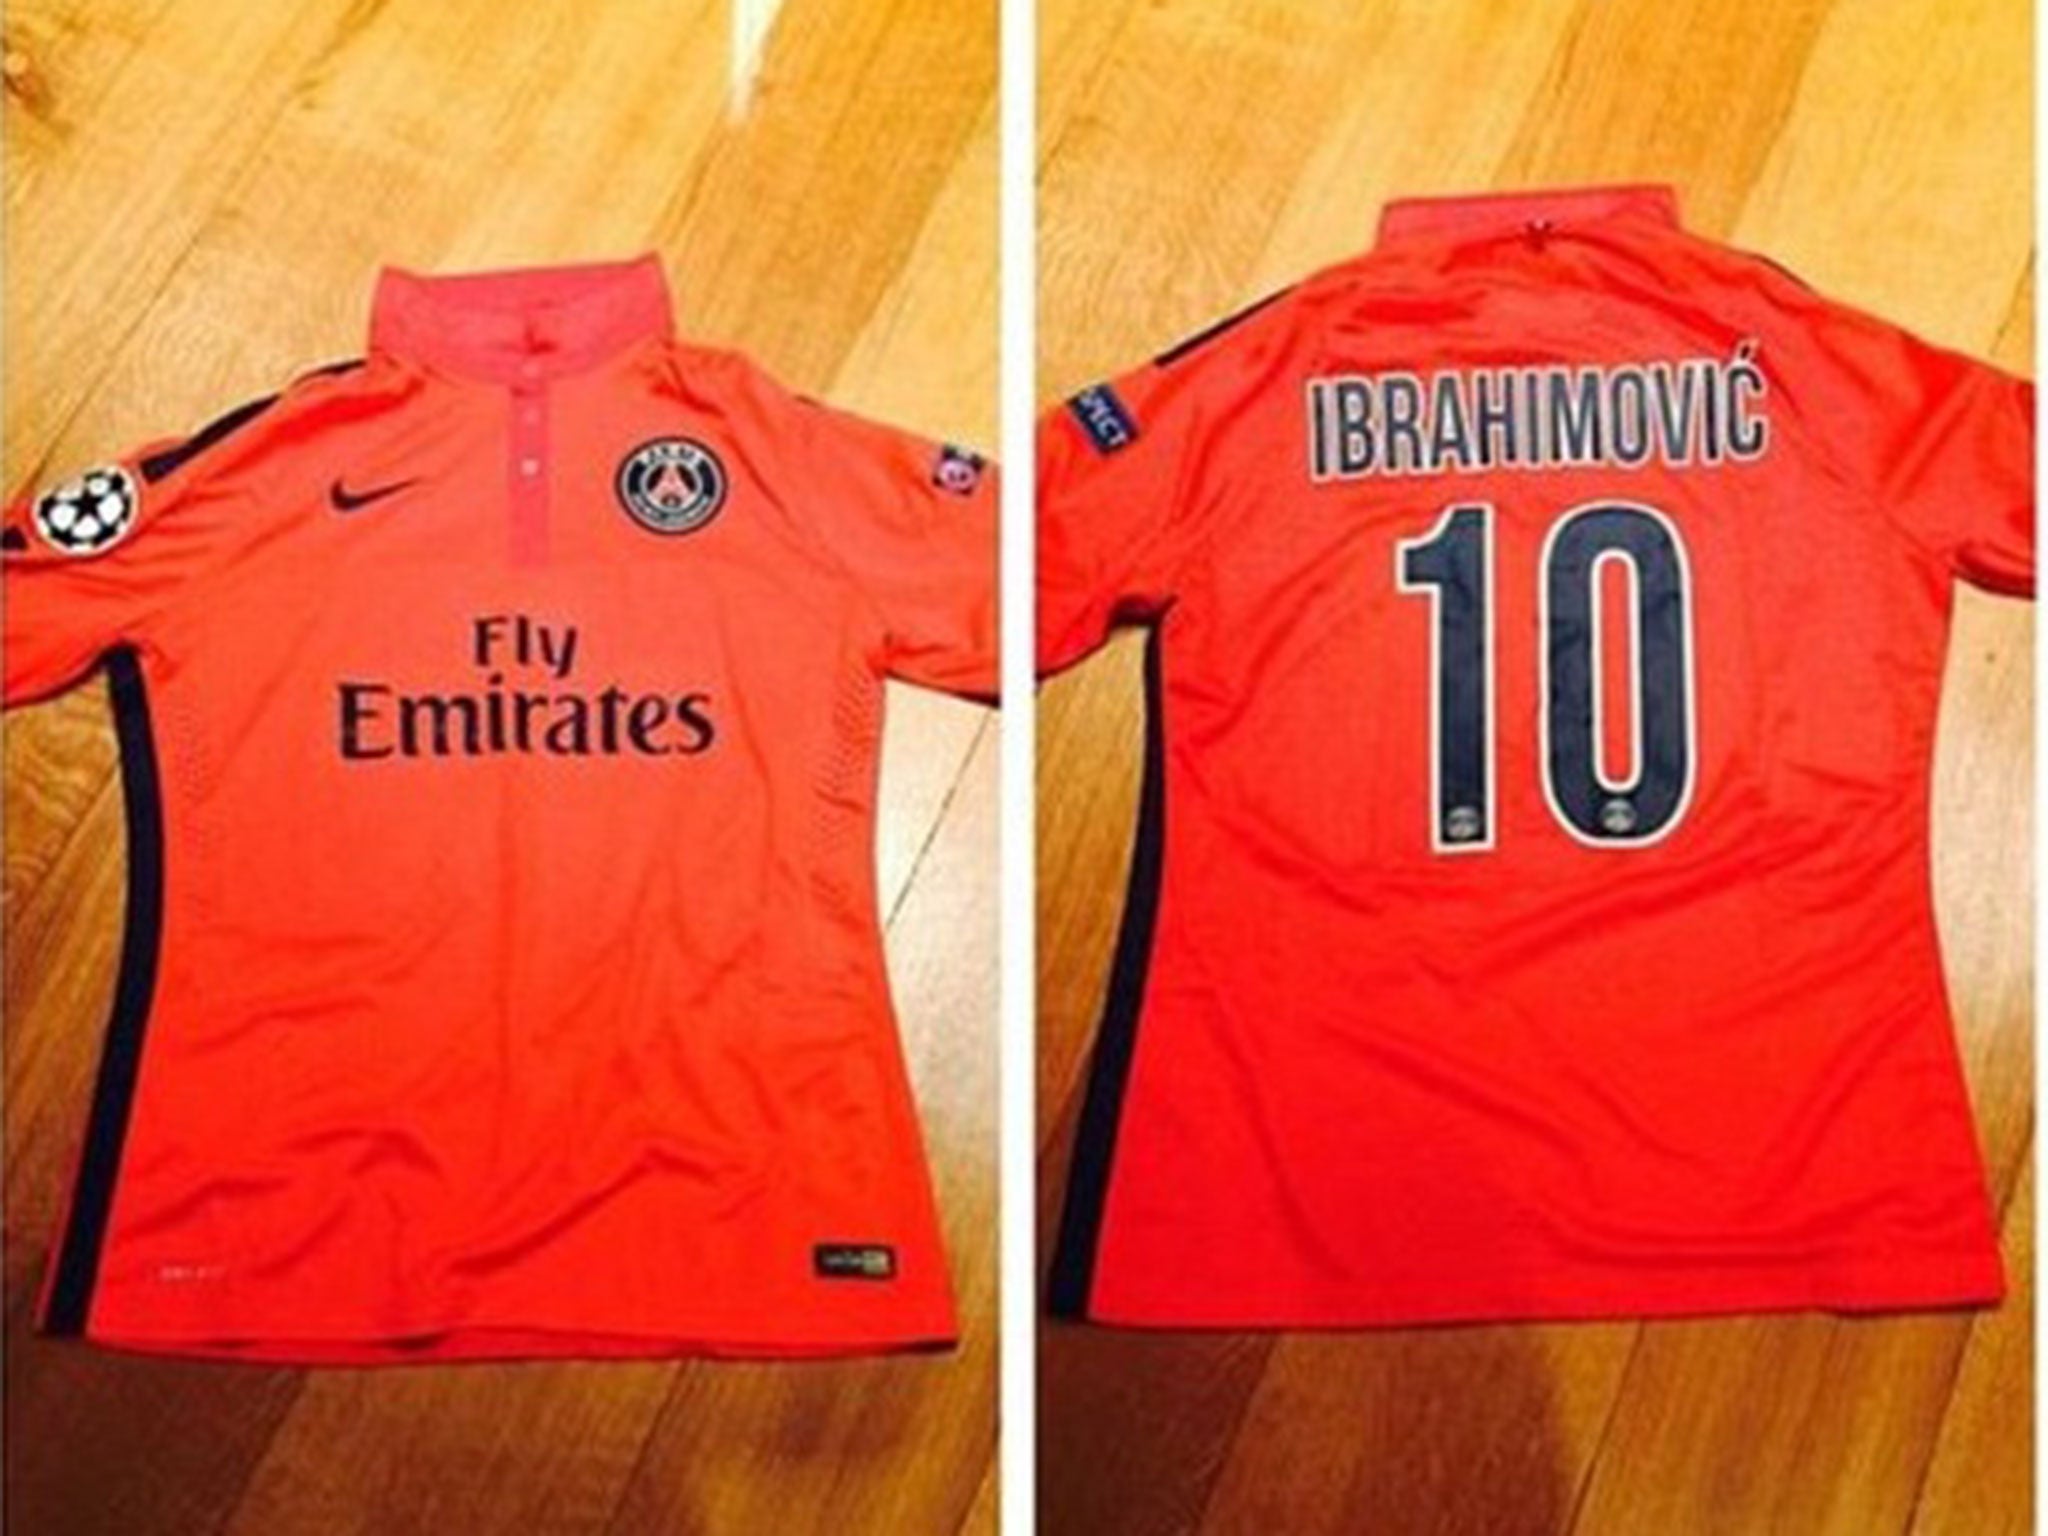 Brooklyn Beckham went home with Zlatan Ibrahimovic's shirt